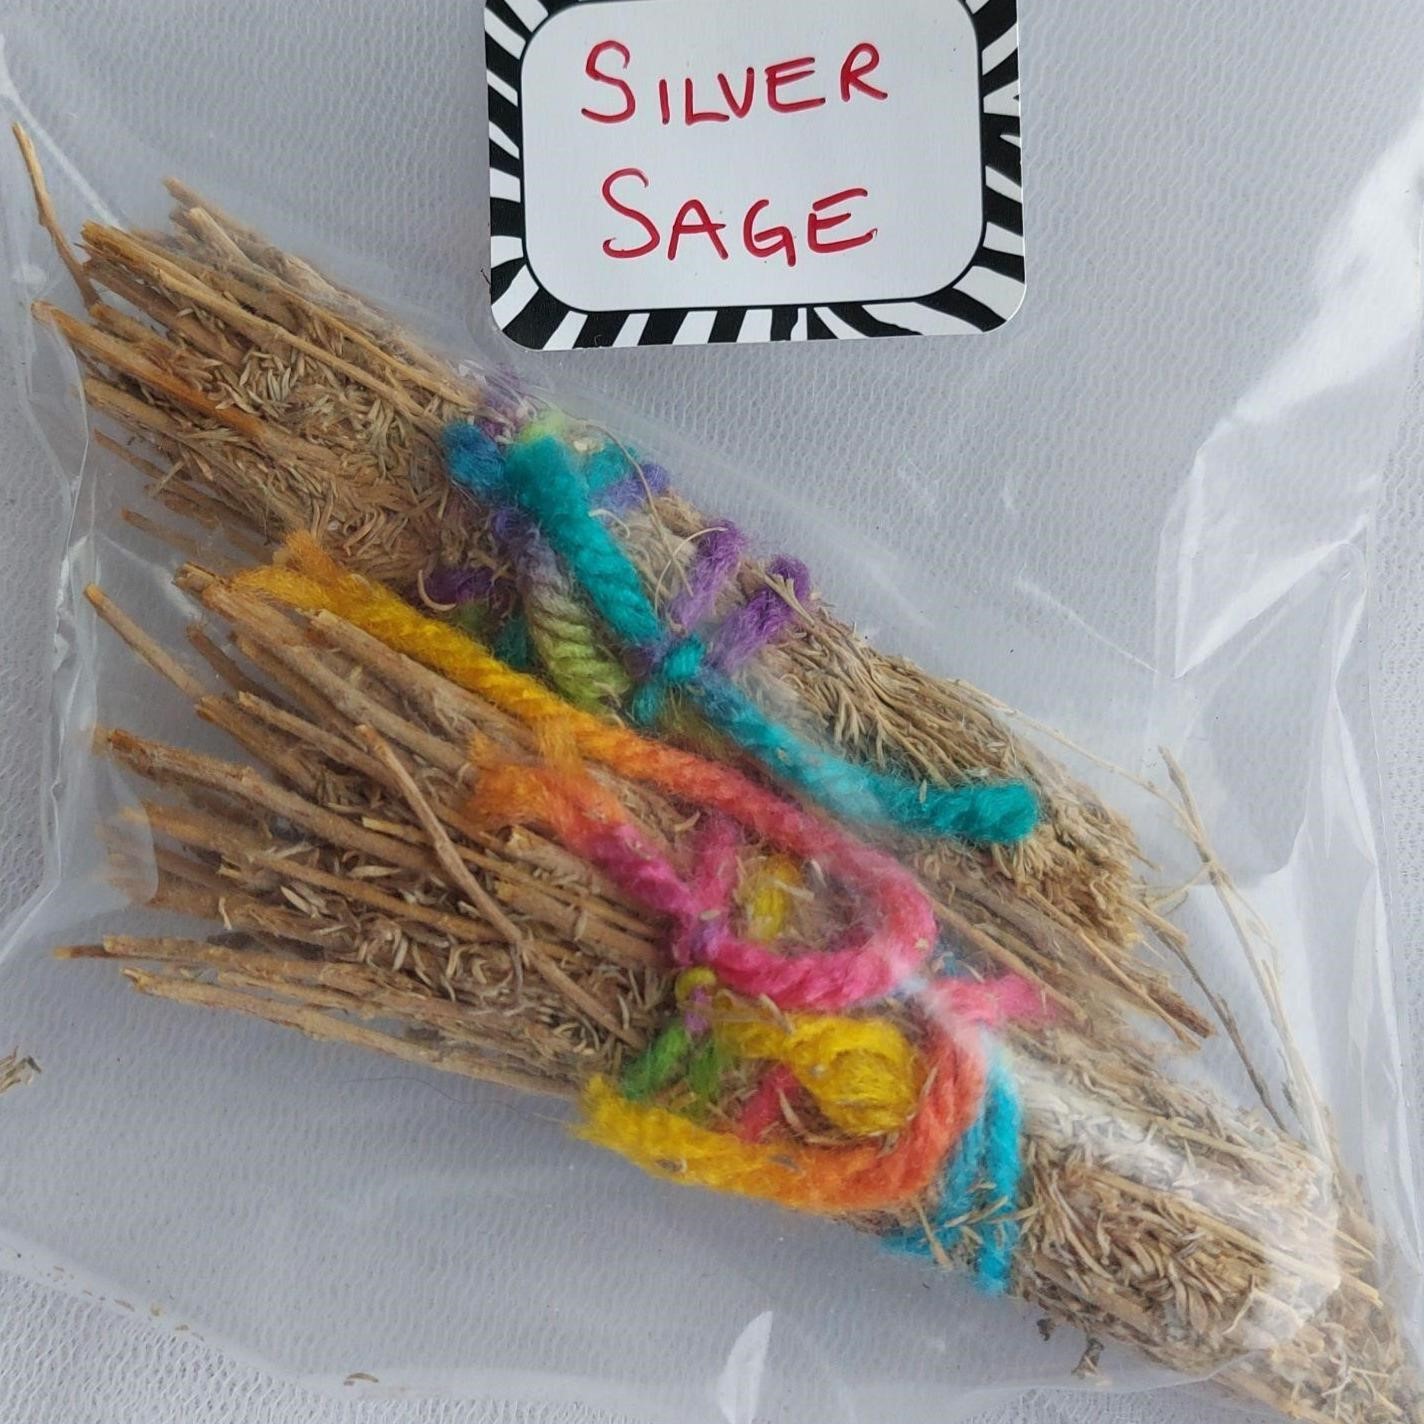 Silver Sage Incense Sticks - Purify - Cleanse